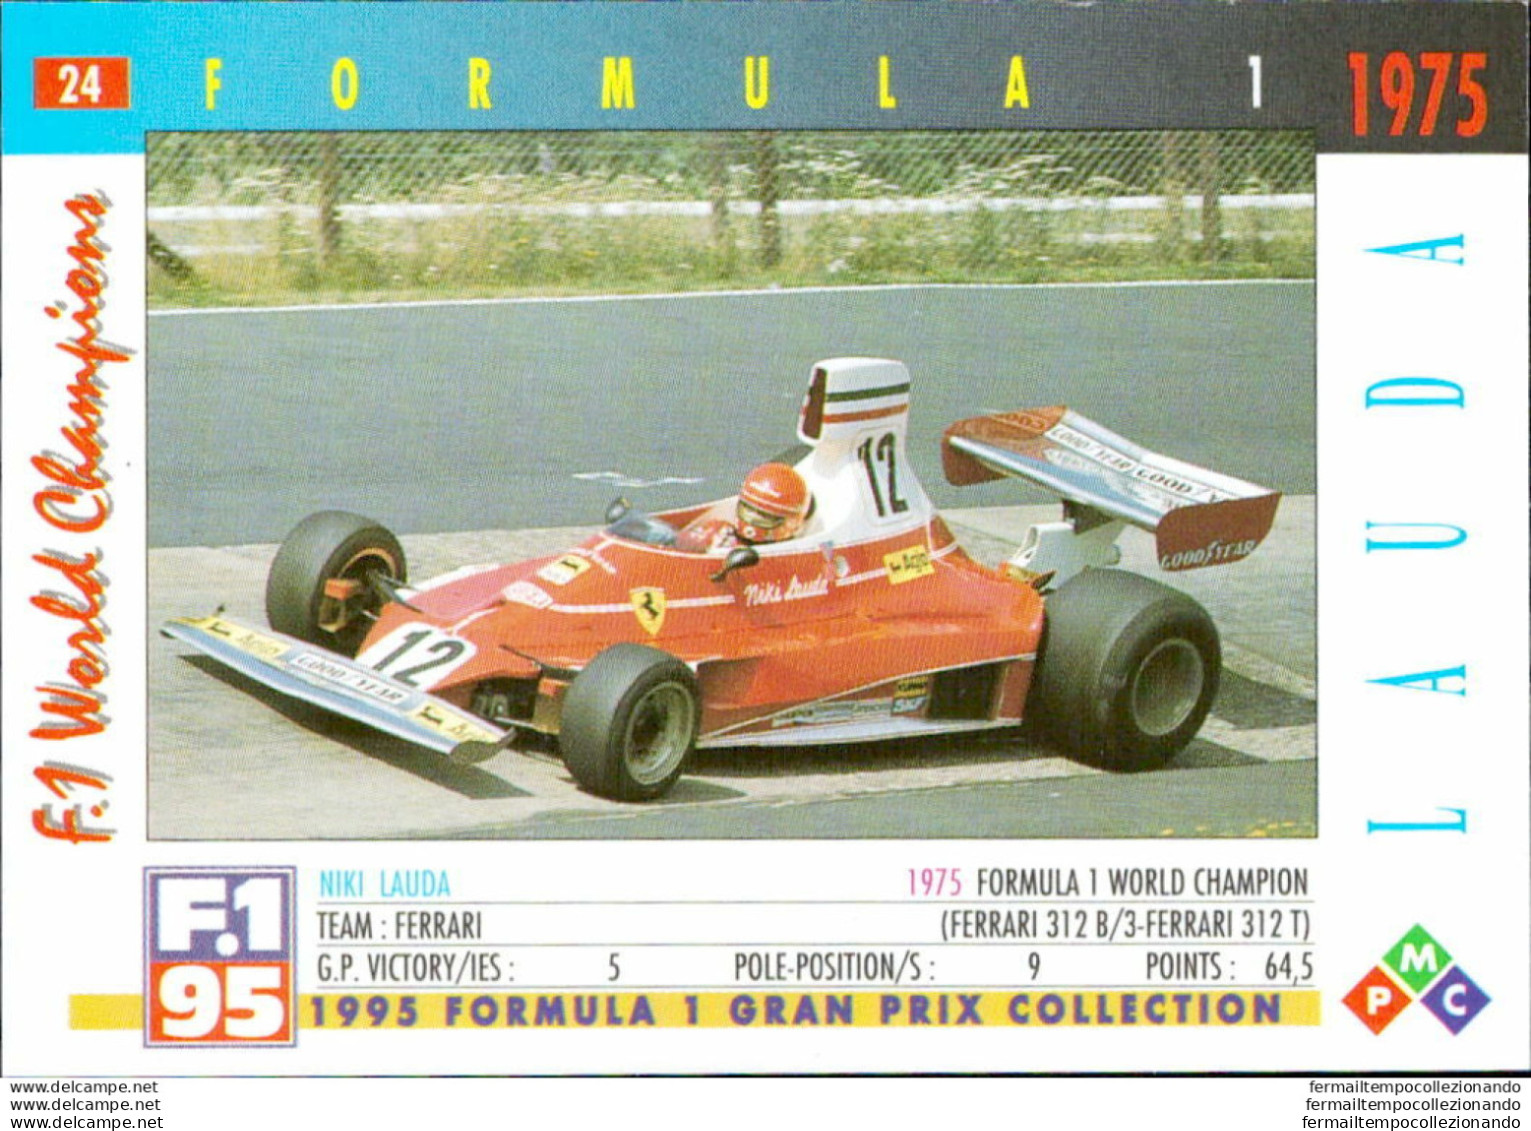 Bh24 1995 Formula 1 Gran Prix Collection Card Lauda N 24 - Catalogues